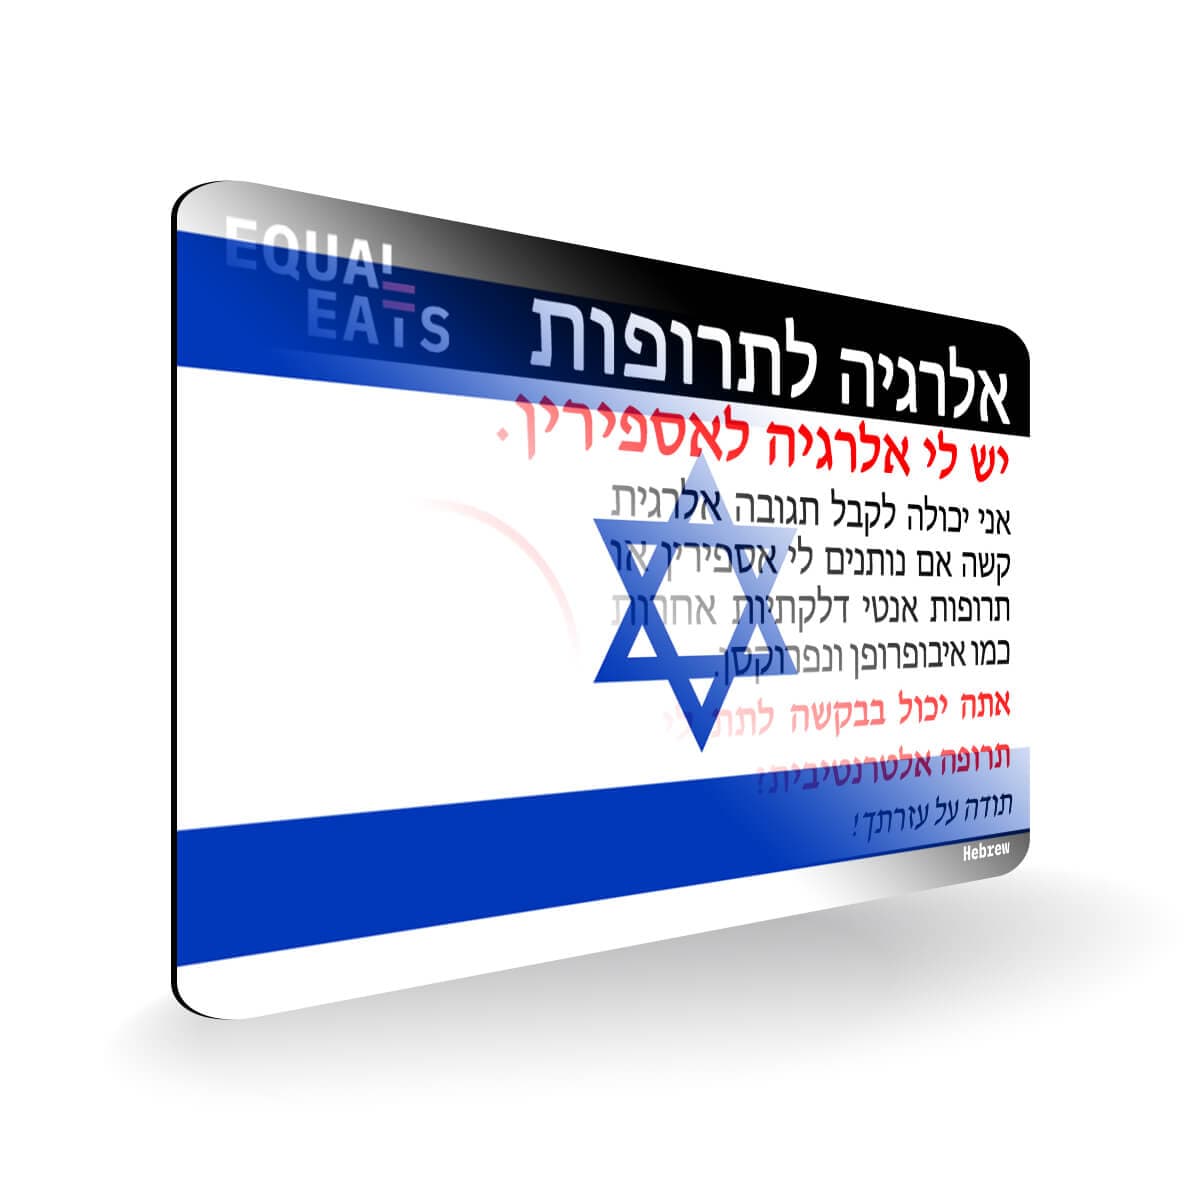 Aspirin Allergy in Hebrew. Aspirin medical I.D. Card for Israel